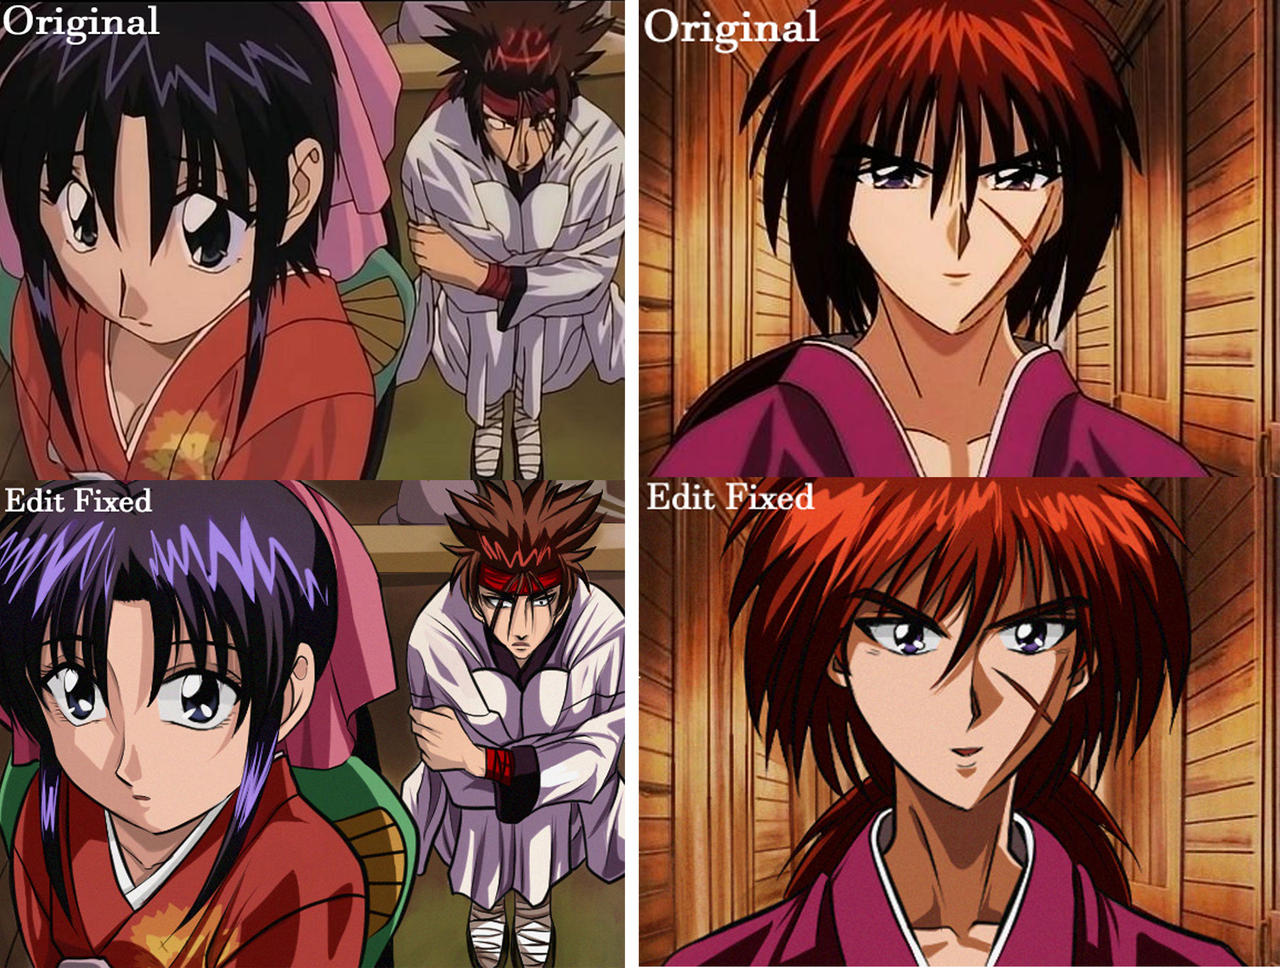 Rurouni Kenshin episode 22 Old vs Edited by Penzoom on DeviantArt